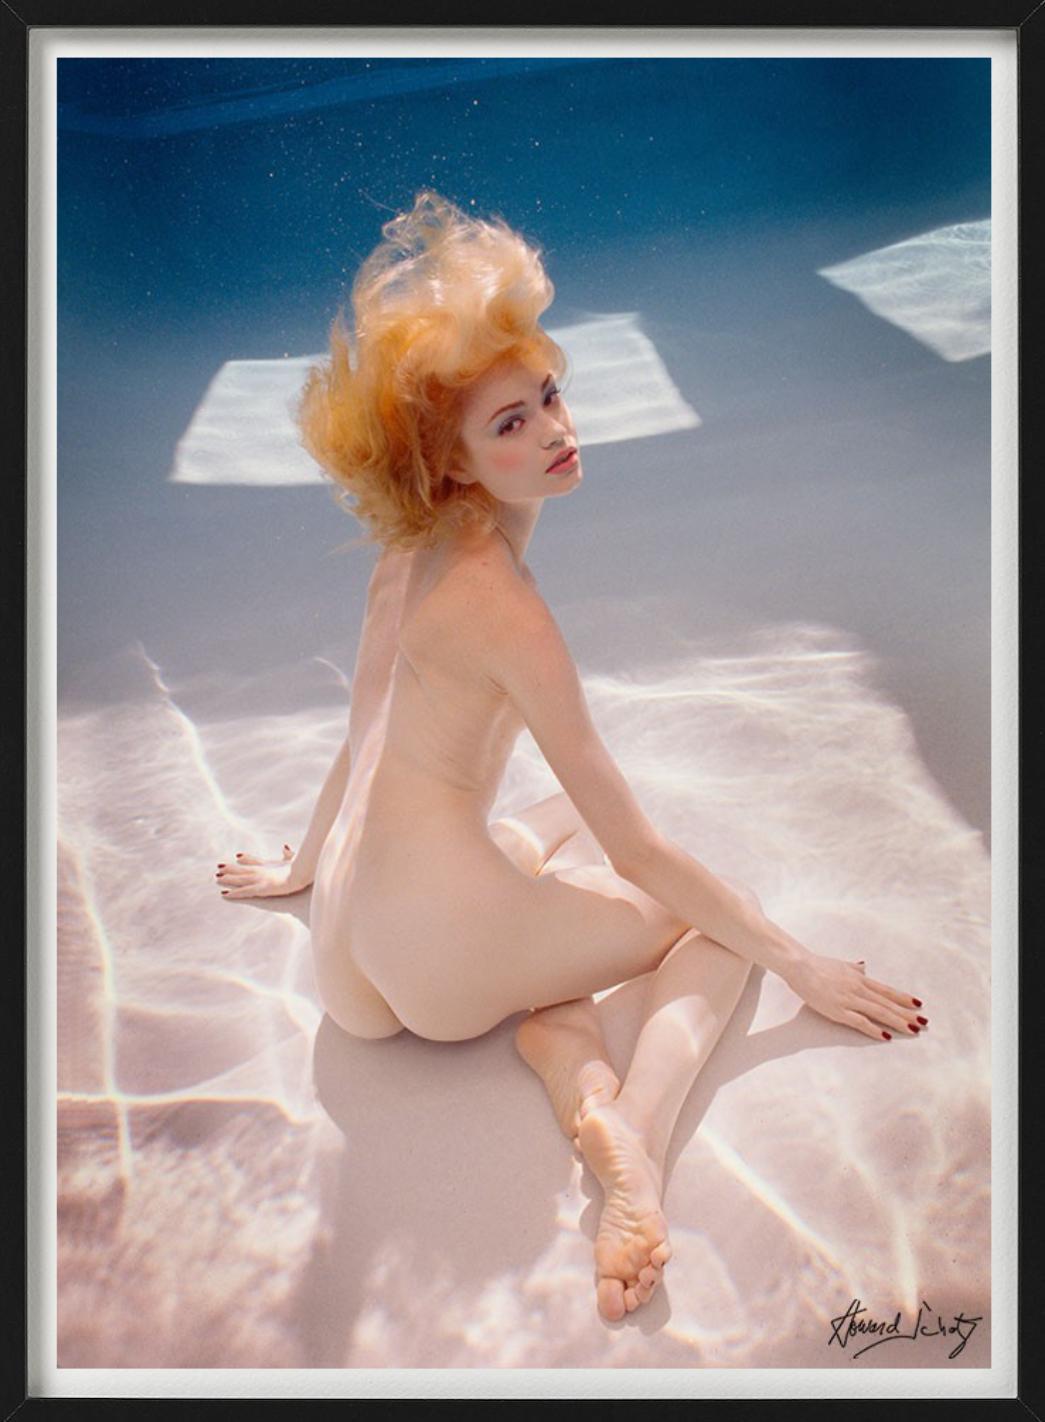 Shawnee sitting on the pool floor - nude underwater, fine art photography, 2018 - Photograph by Howard Schatz